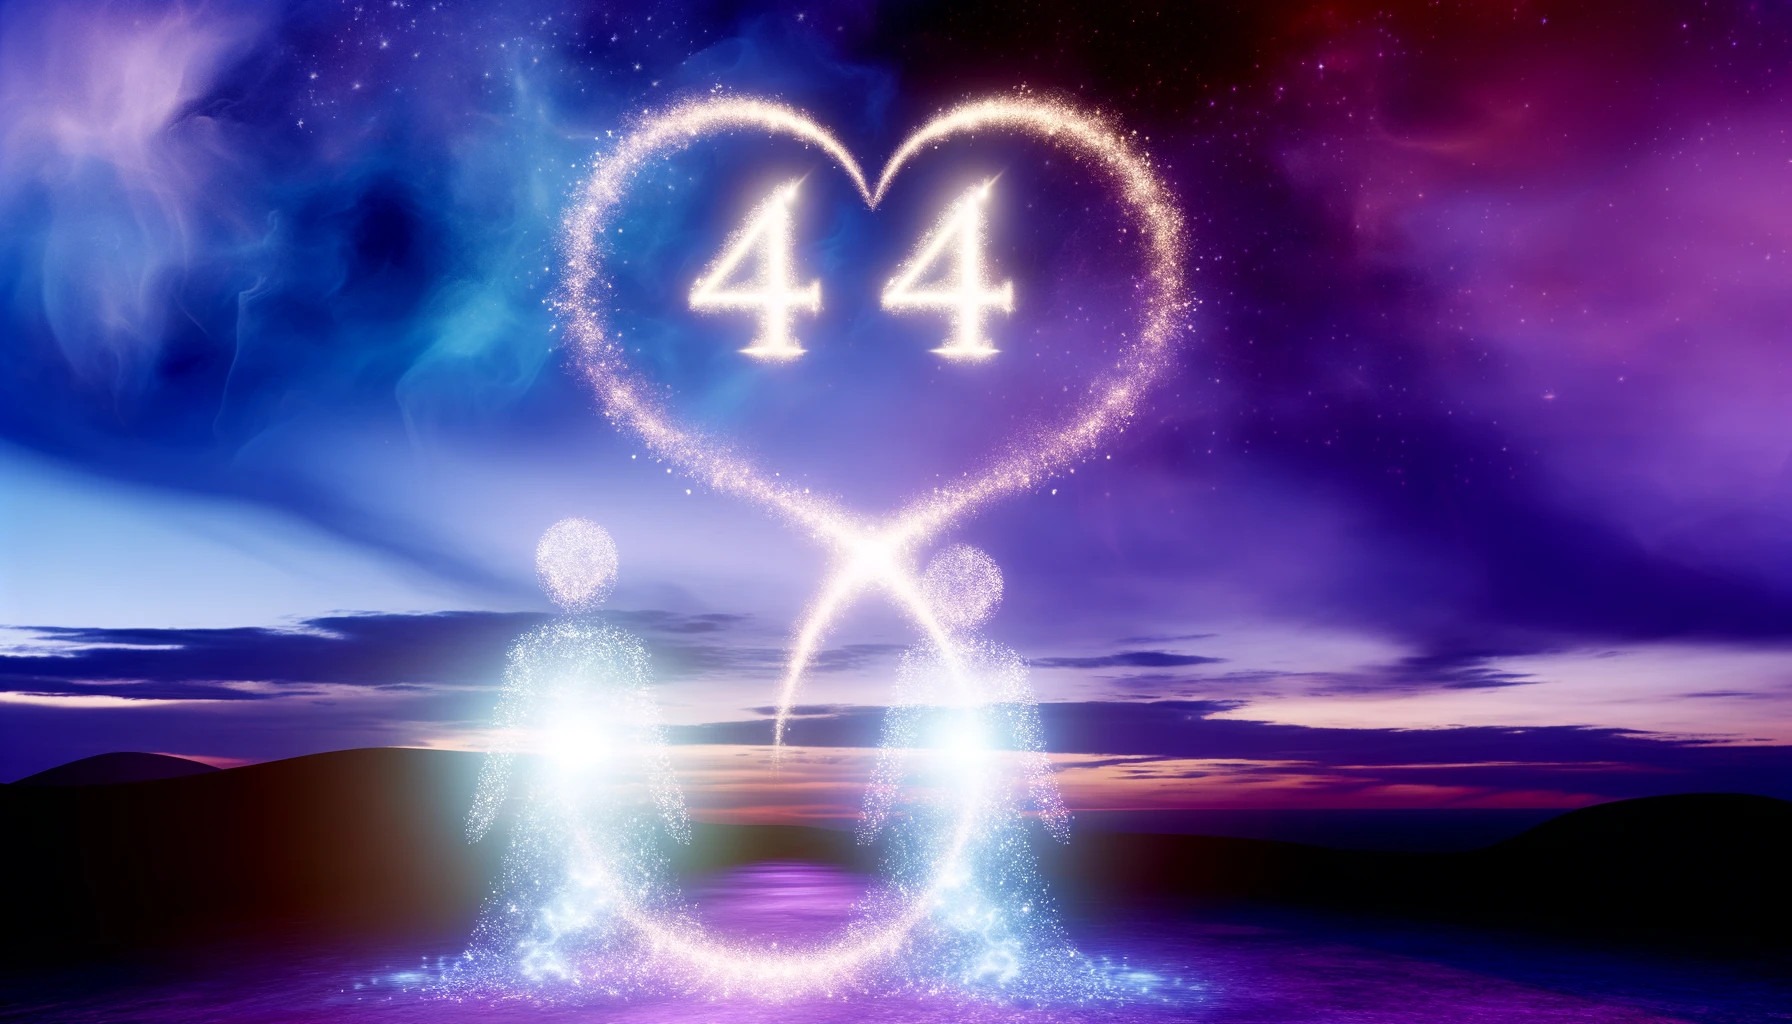 engelengetal 444 voor spirituele verbinding